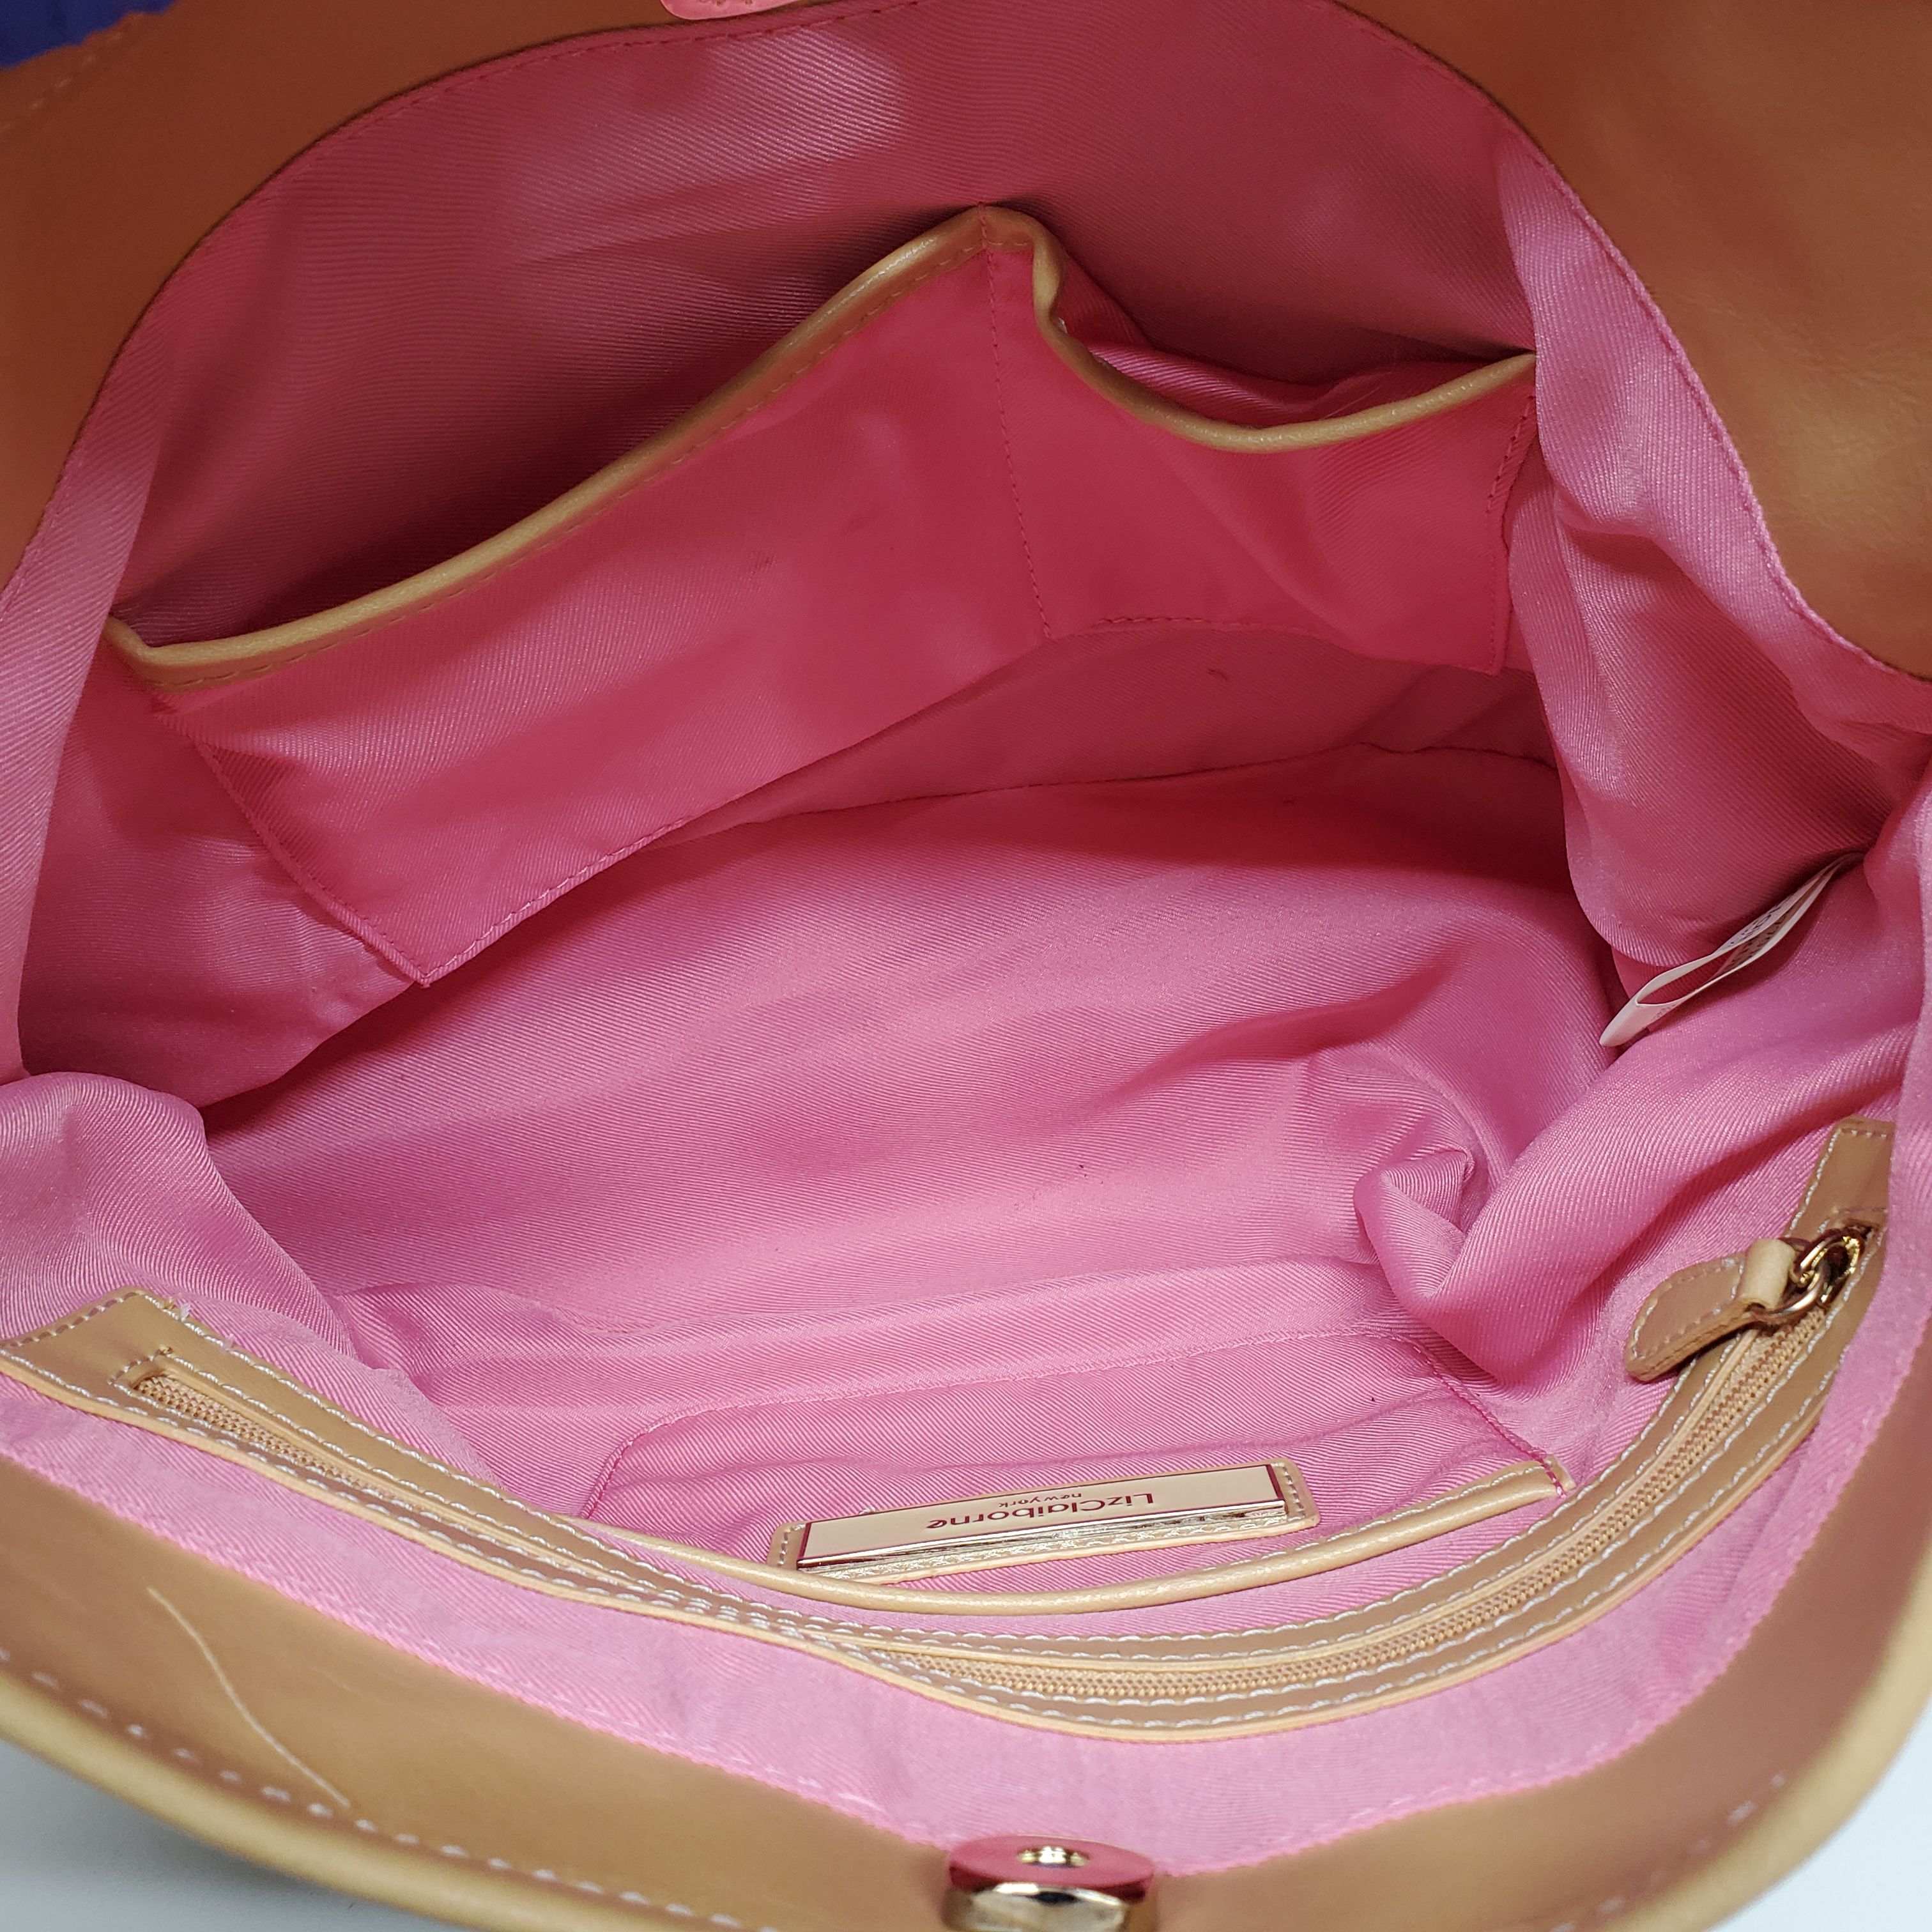 LIZ CLAIBORNE NYC Leather - brown leather Shoulder Bag £3.50 - PicClick UK